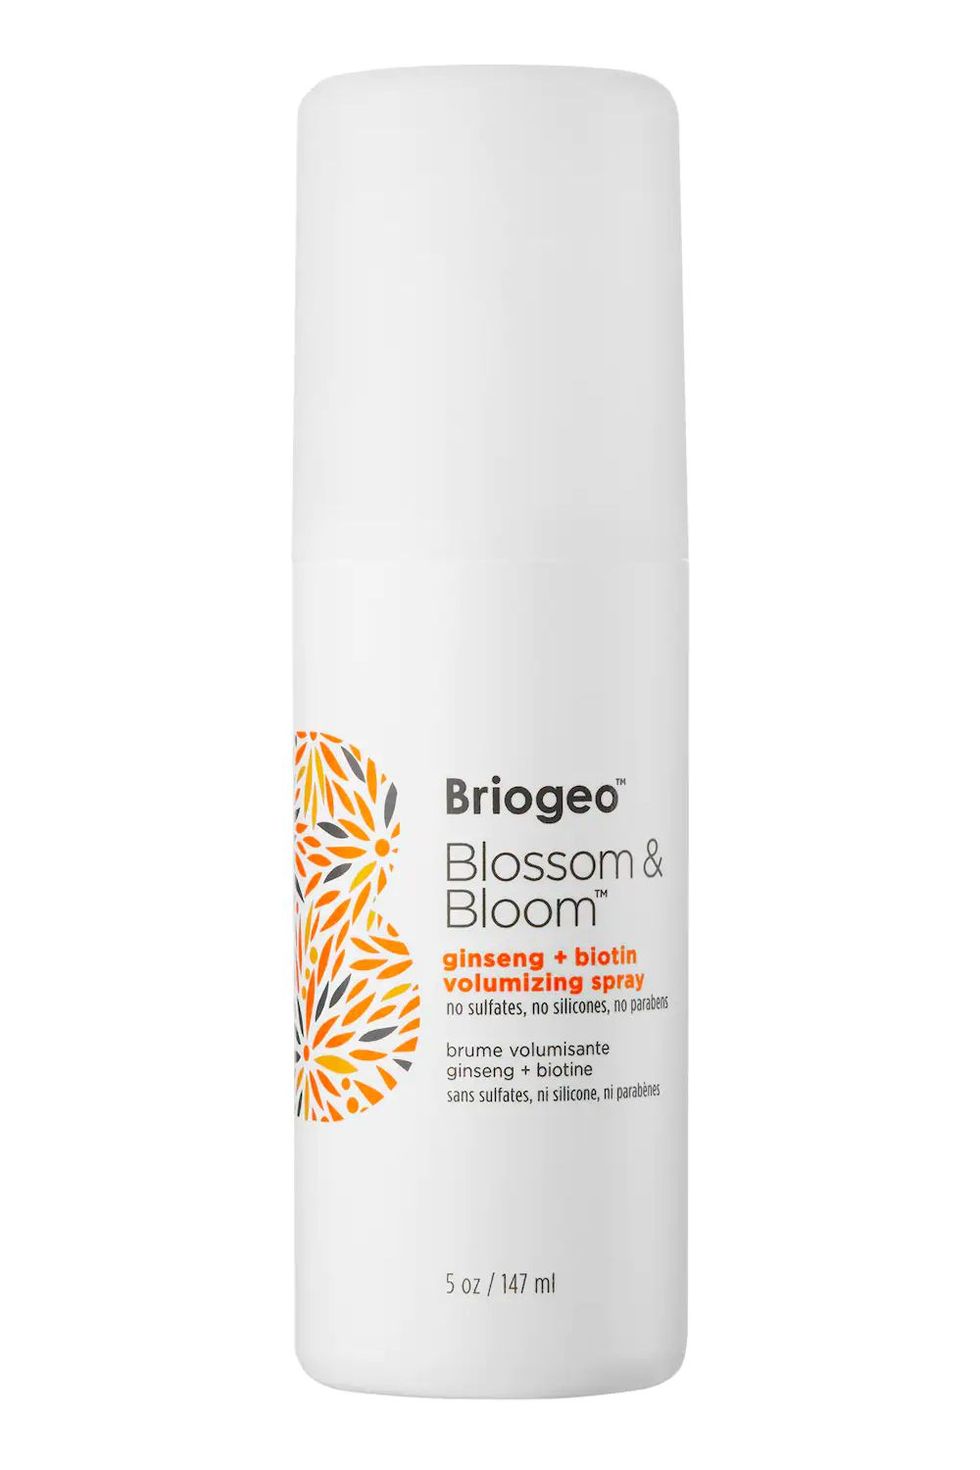 Briogeo Blossom & Bloom Ginseng + Biotin Hair Volumizing Spray